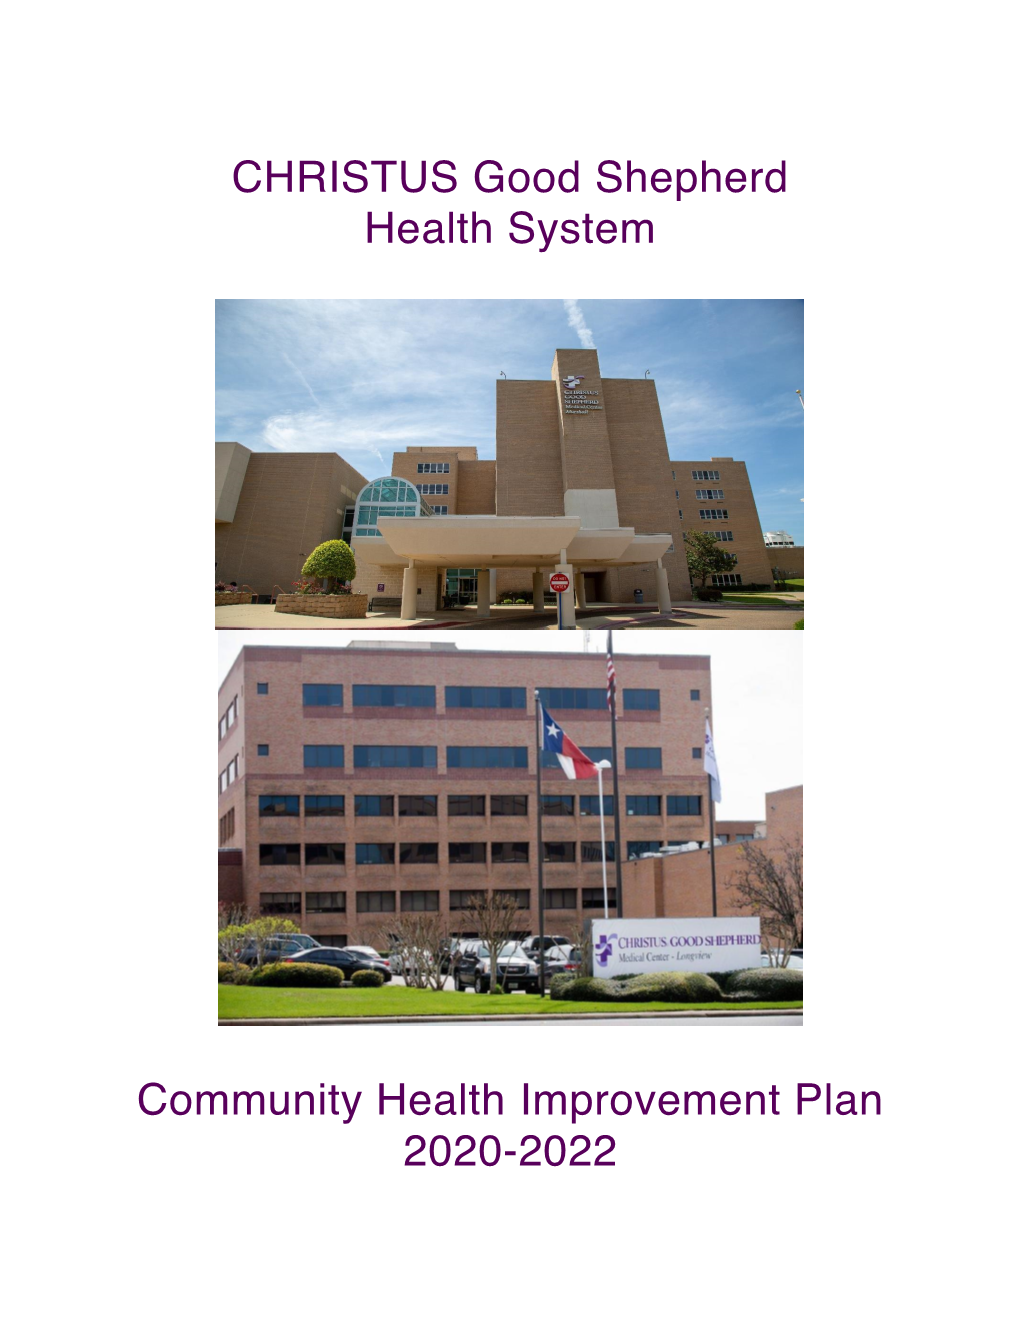 CHRISTUS Good Shepherd Health System Community Health